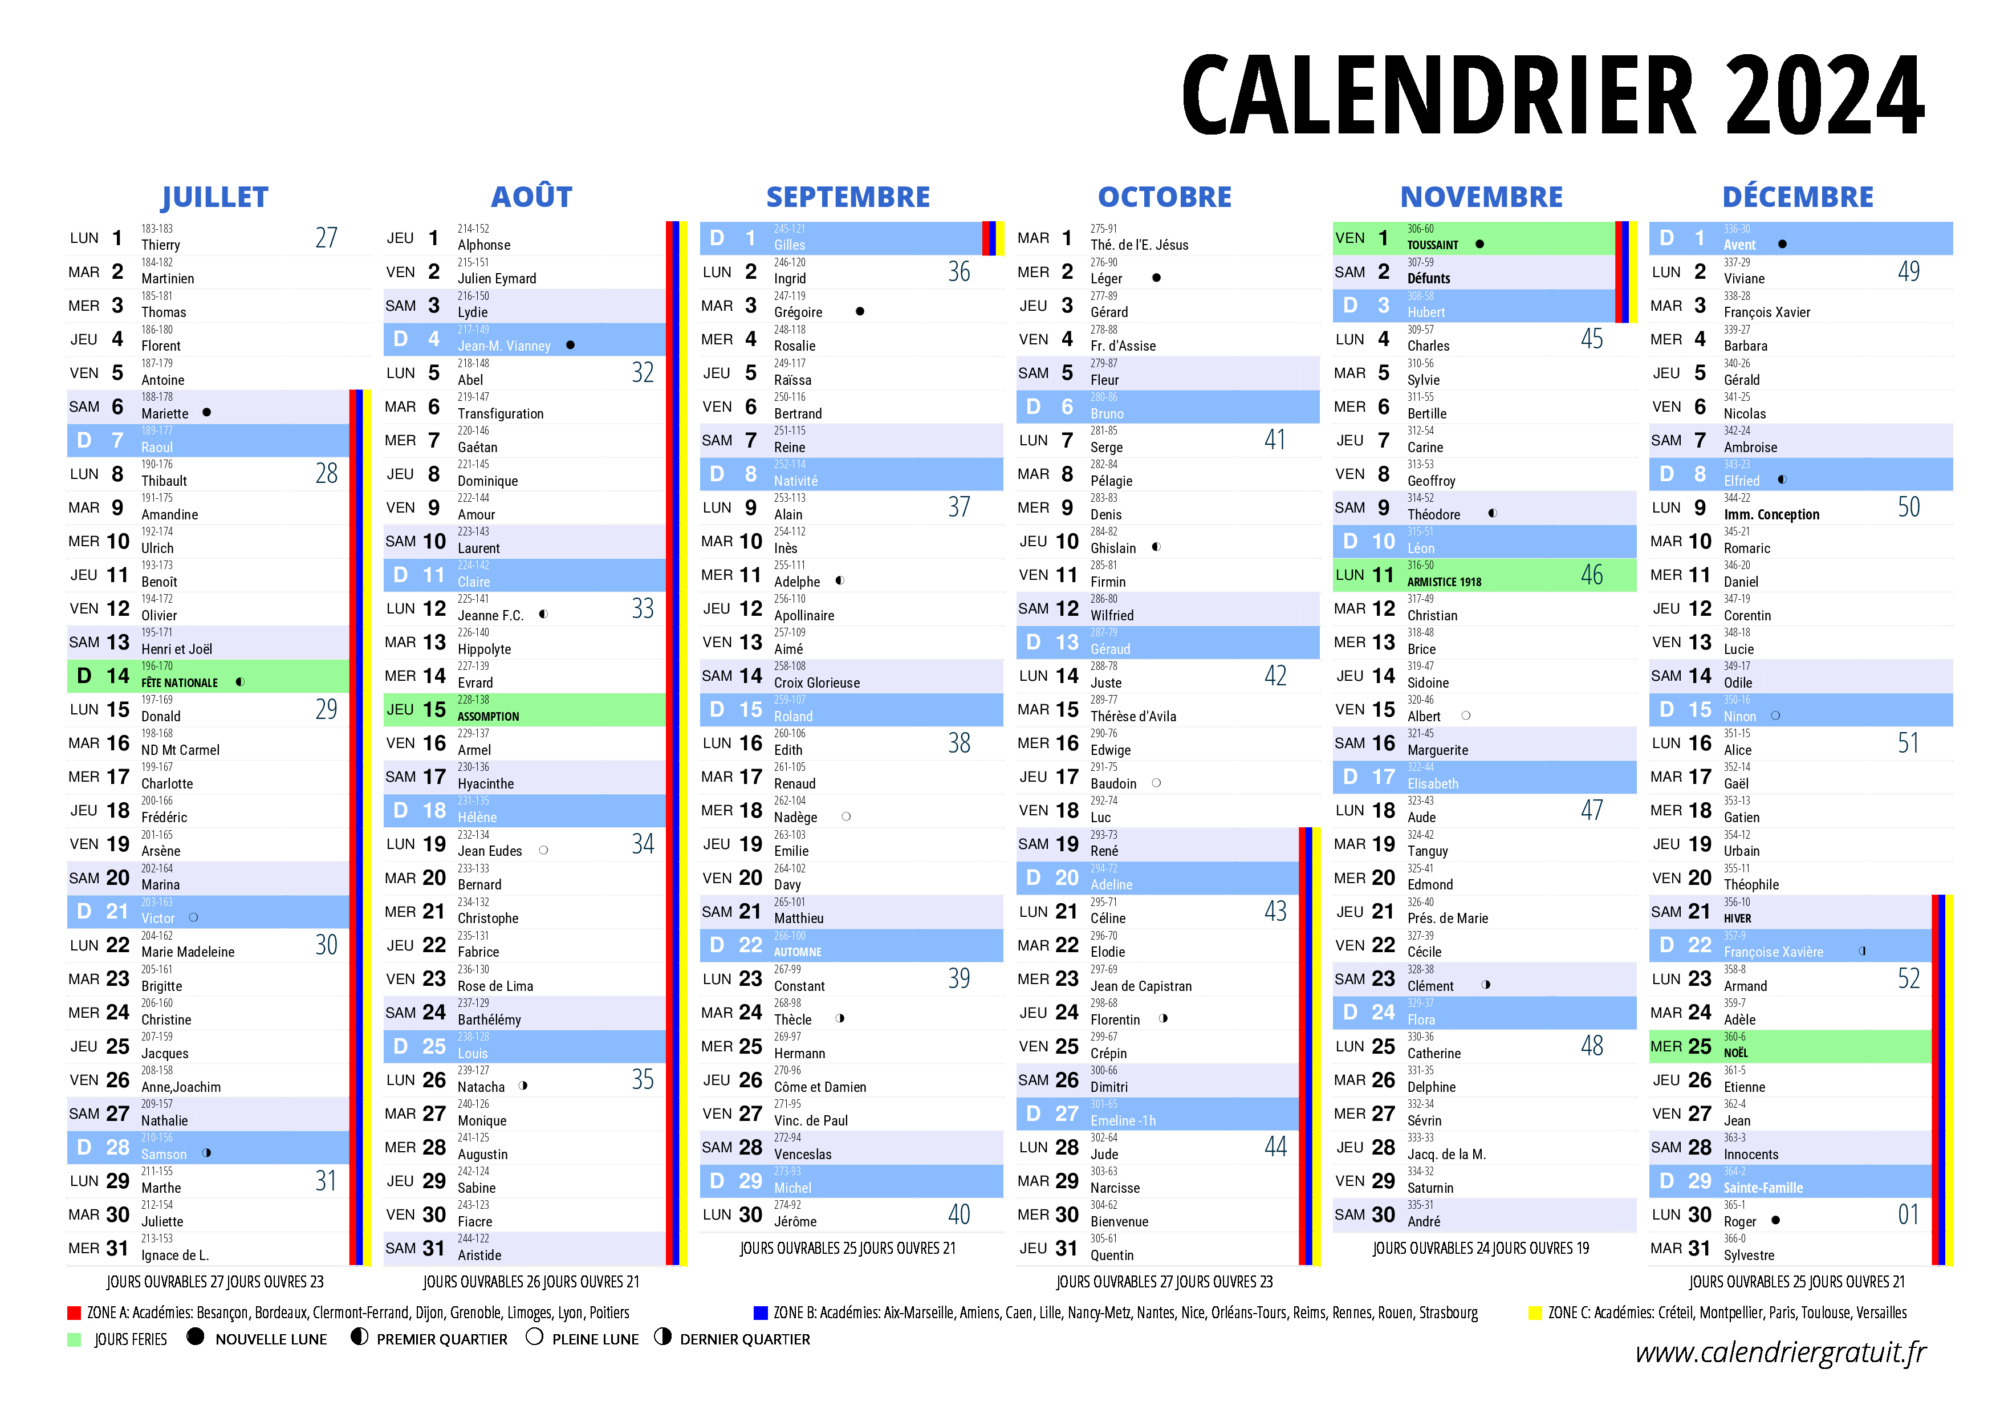 Calendrier hebdomadaire 2024 Excel, Word et PDF